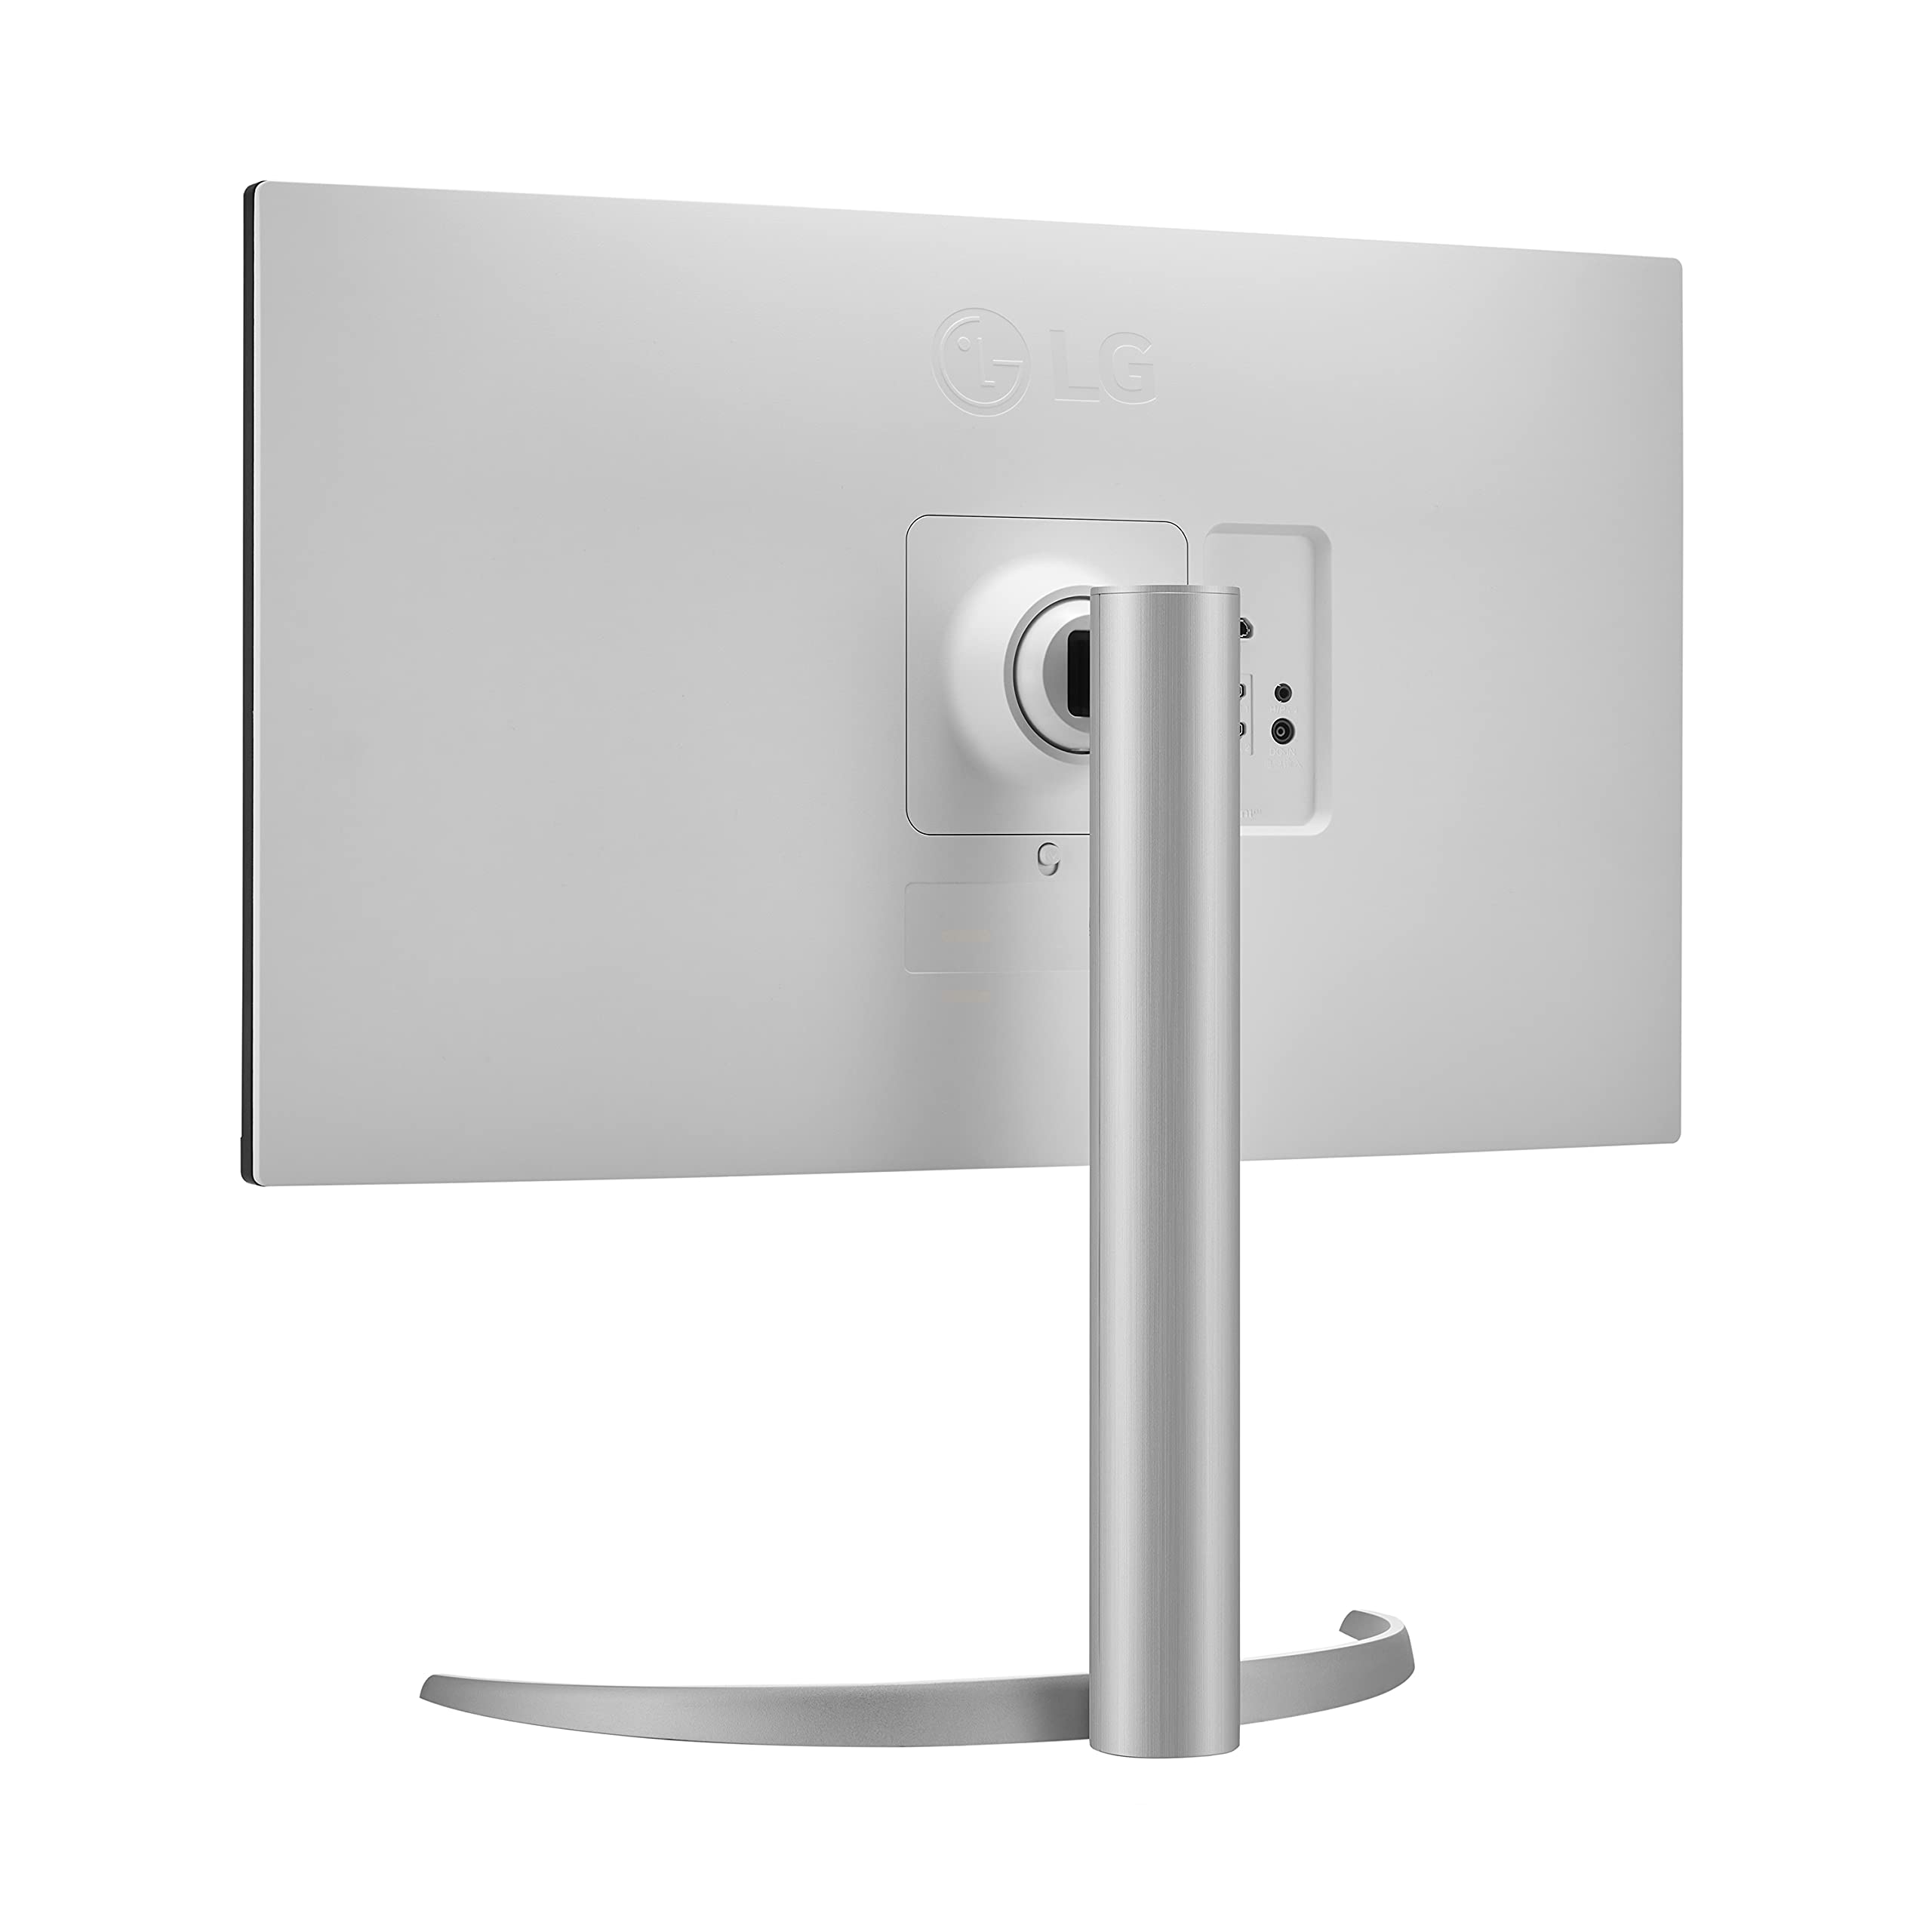 LG 27UP650-W.AUS Monitor 27” UHD (3840 x 2160) IPS Display, VESA DisplayHDR 400, DCI-P3 95% Color Gamut, 3-Side Virtually Borderless Display, Height/Pivot/Tilt Adjustable Stand – Silver